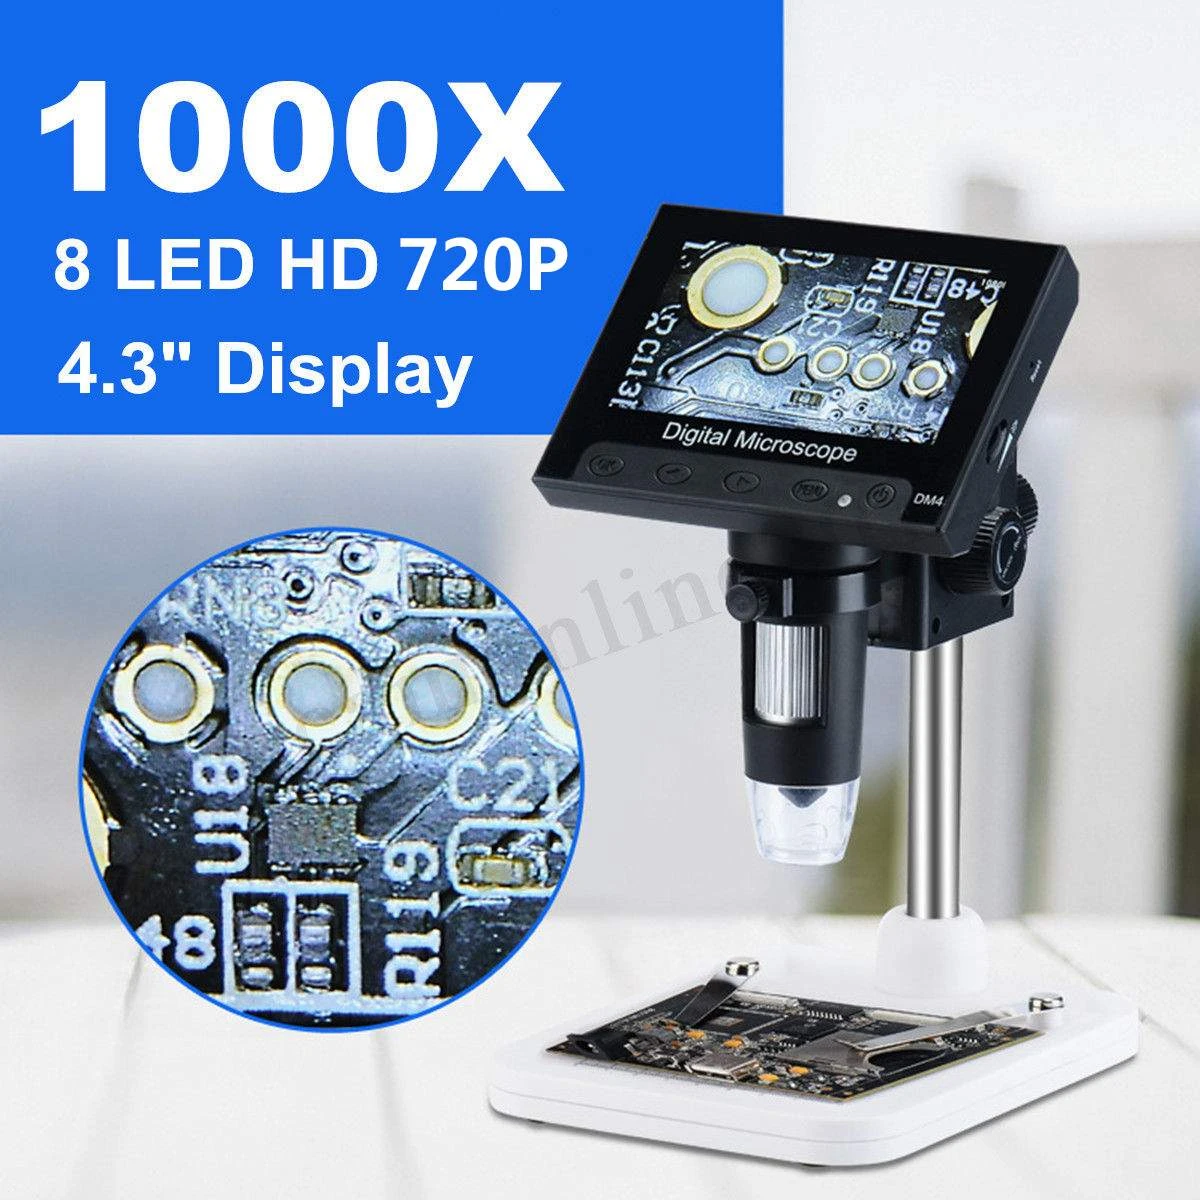 1000x 2.0MP USB Digital Electronic Microscope DM4 4.3